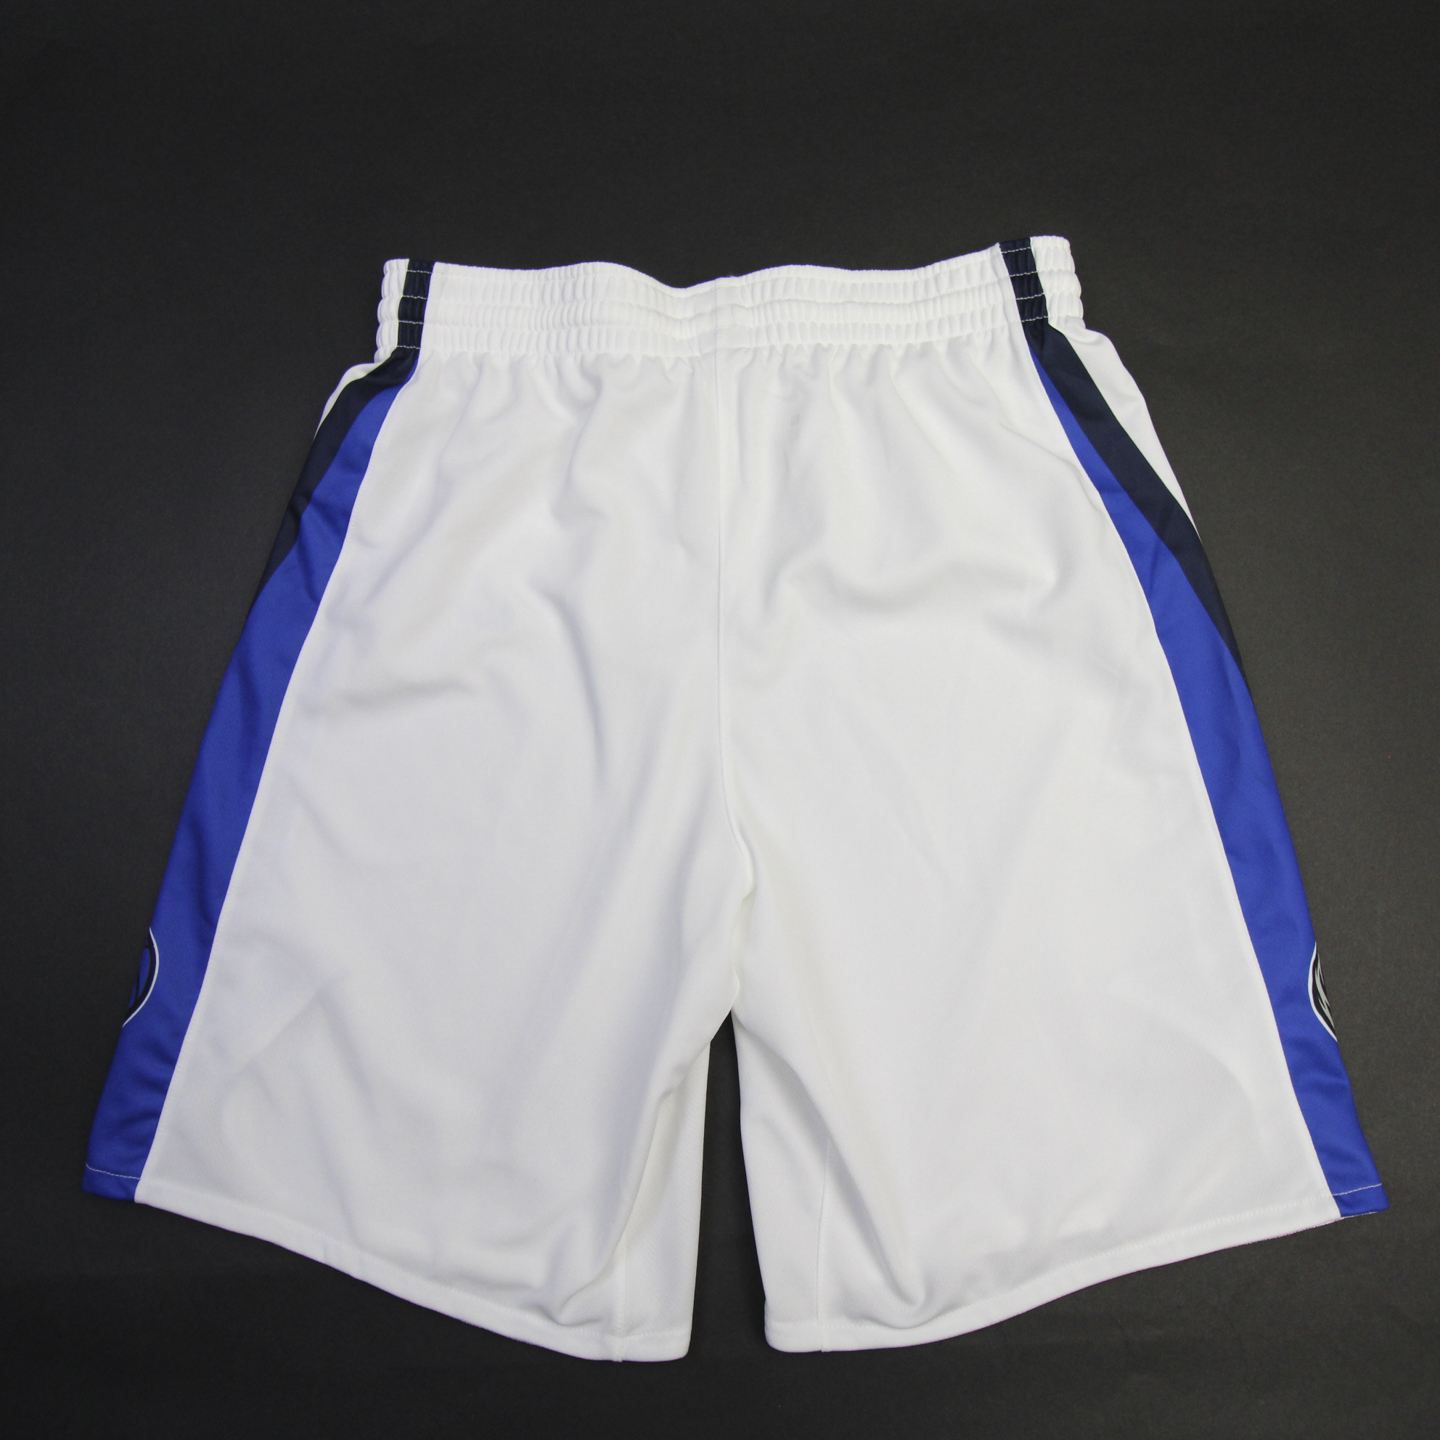 Dallas Mavericks Nike Athletic Shorts Men's White/Blue New with Defect